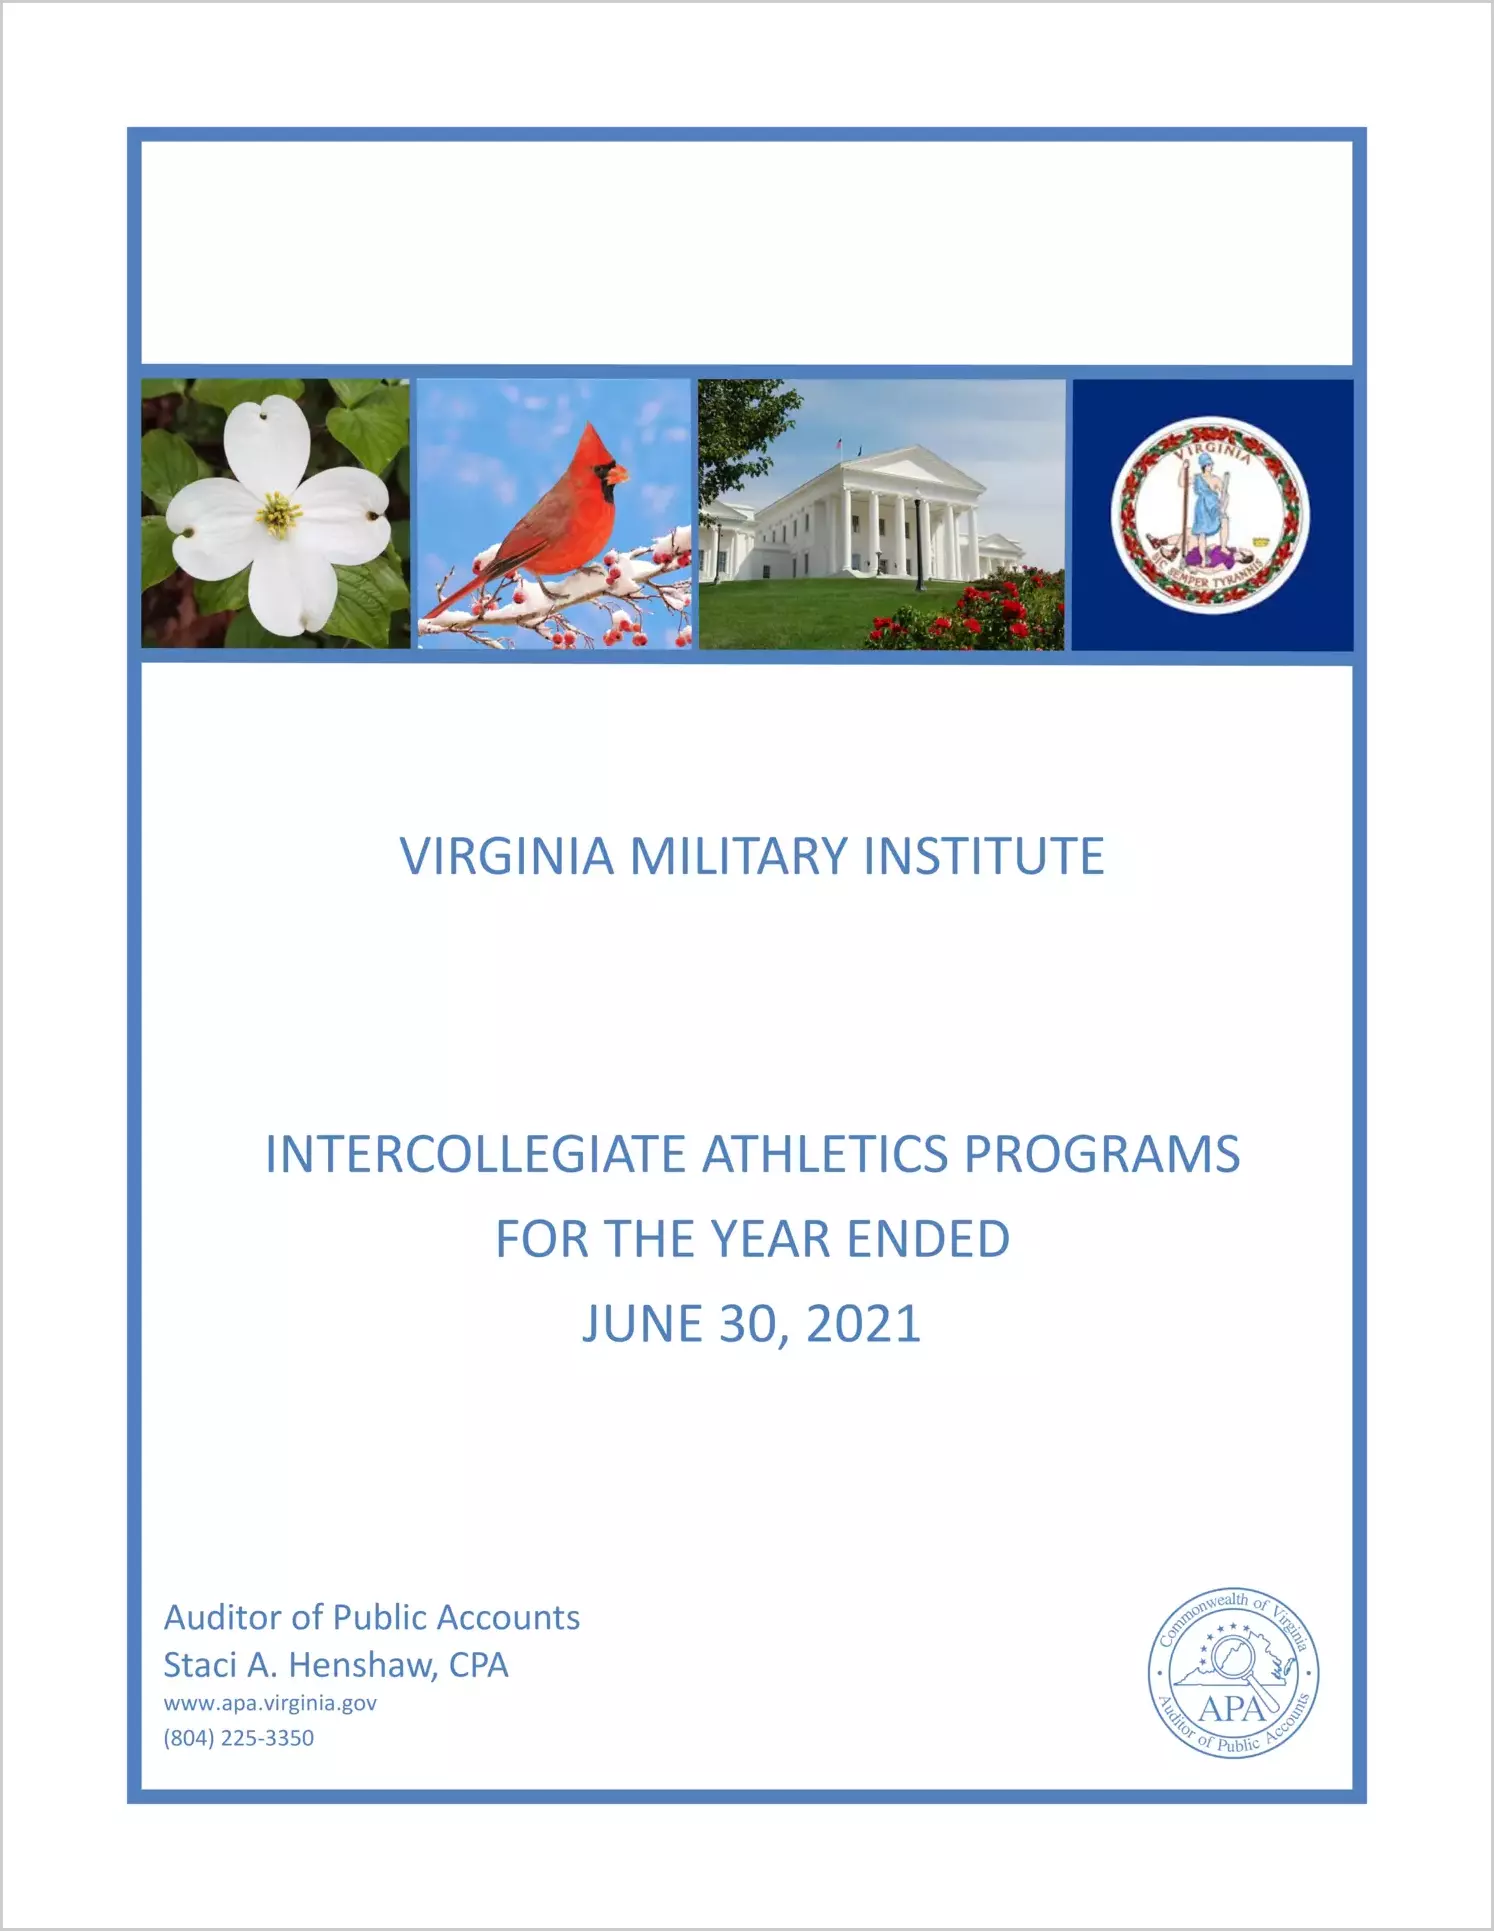 Virginia Military Institute Intercollegiate Athletics Programs for the year ended June 30, 2021